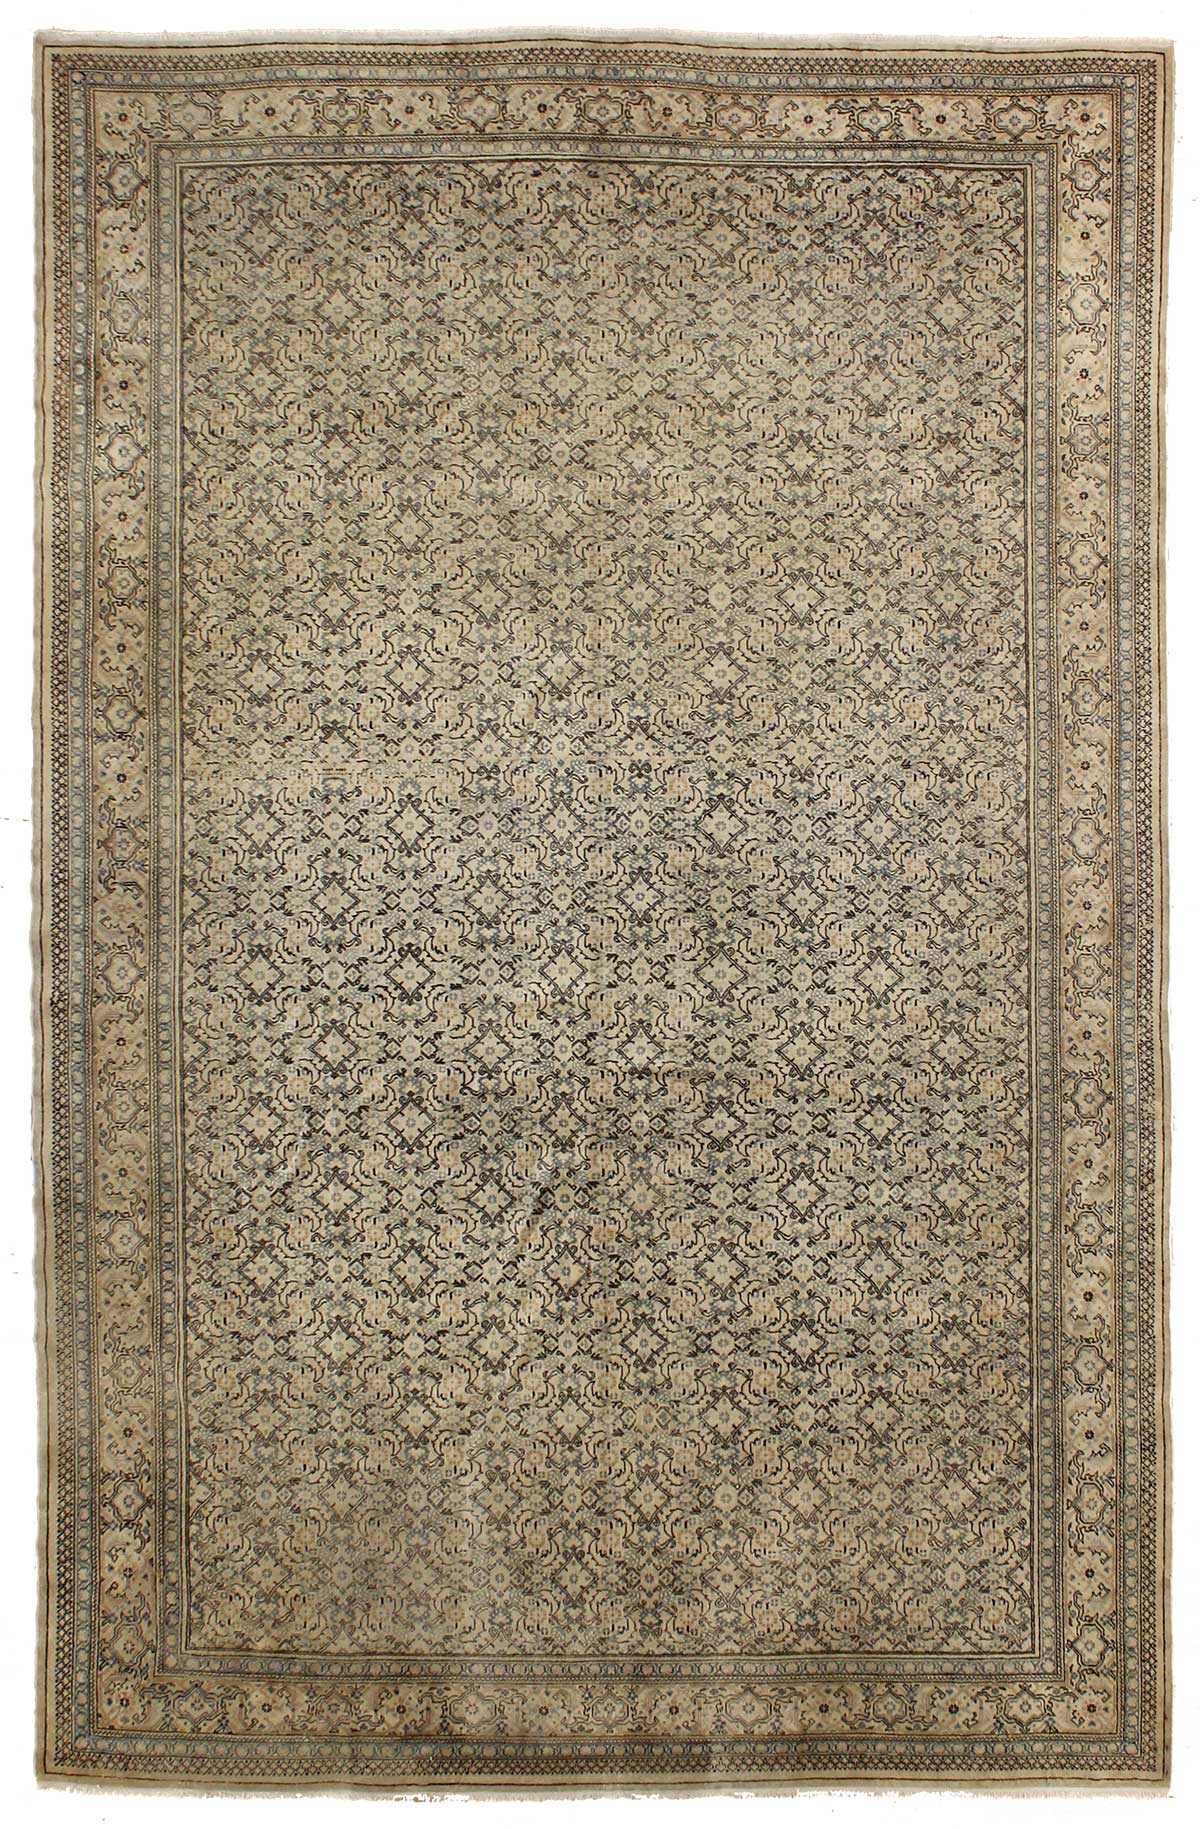 Antique Sivas Handwoven Traditional Rug